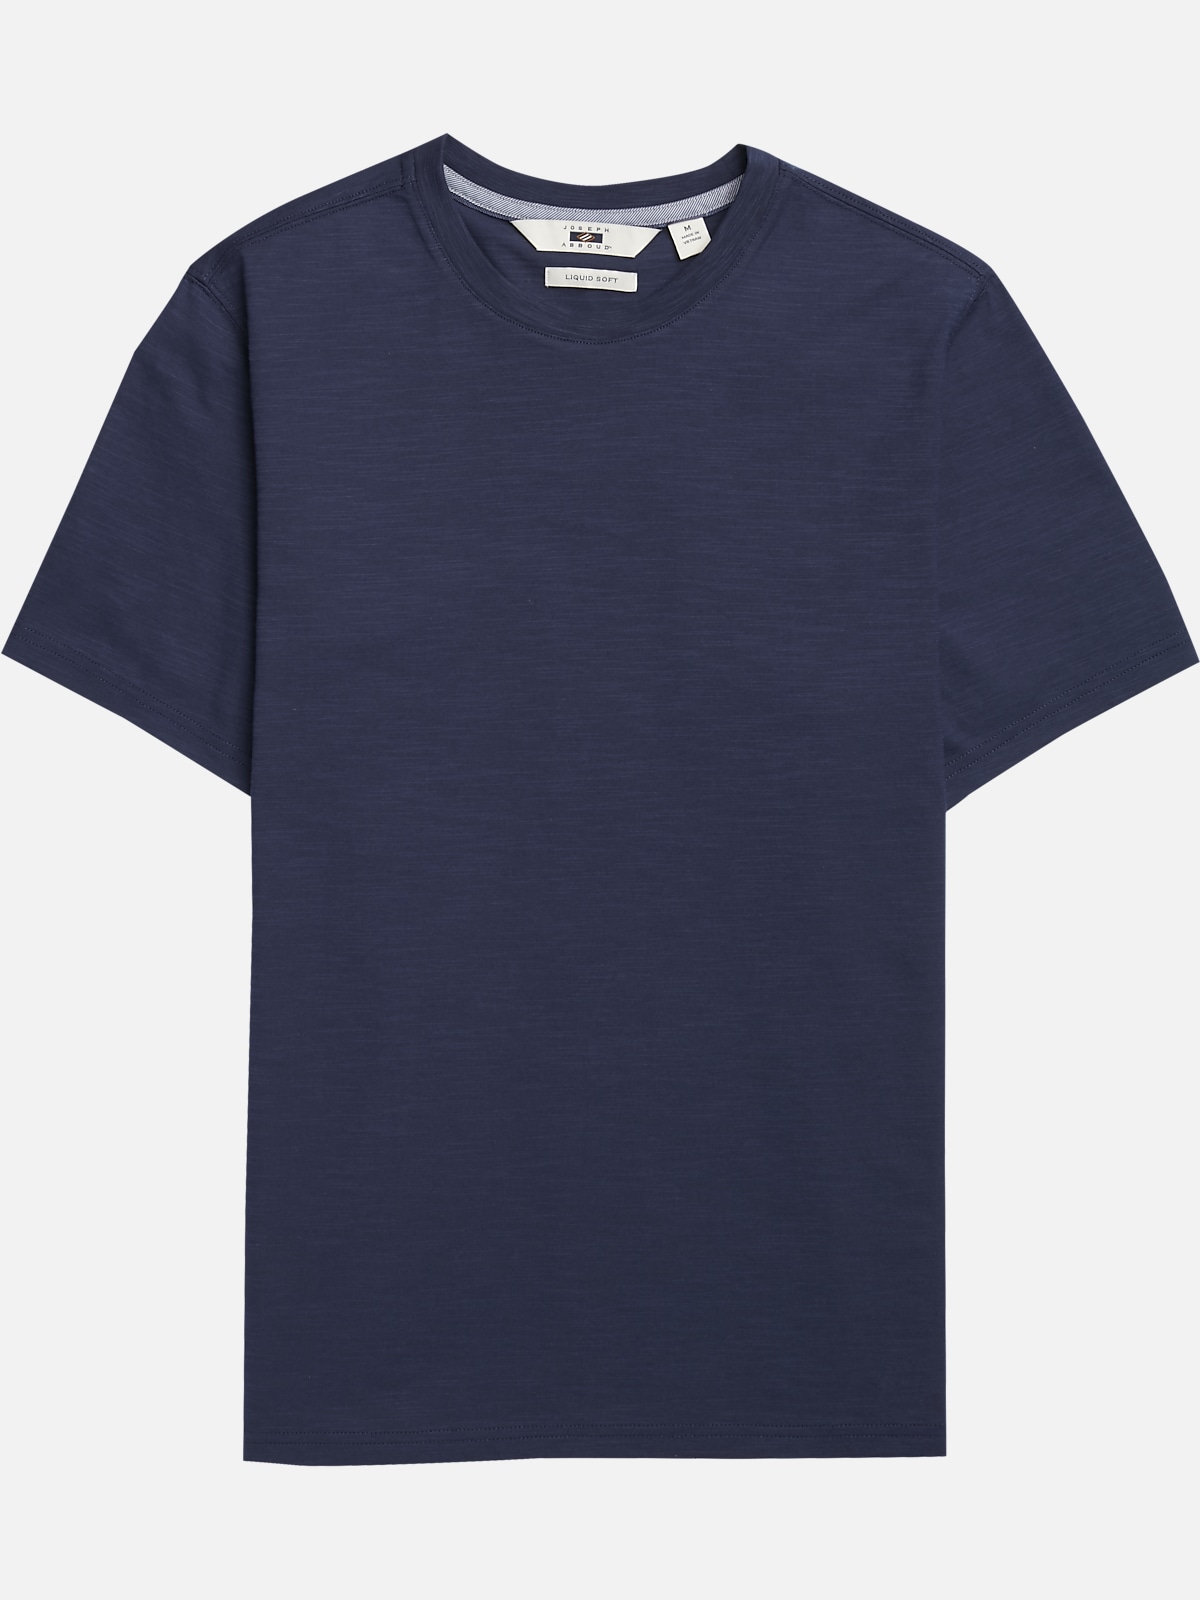 Joseph Abboud Short Sleeve Crew Neck Shirt | All Sale| Men's Wearhouse